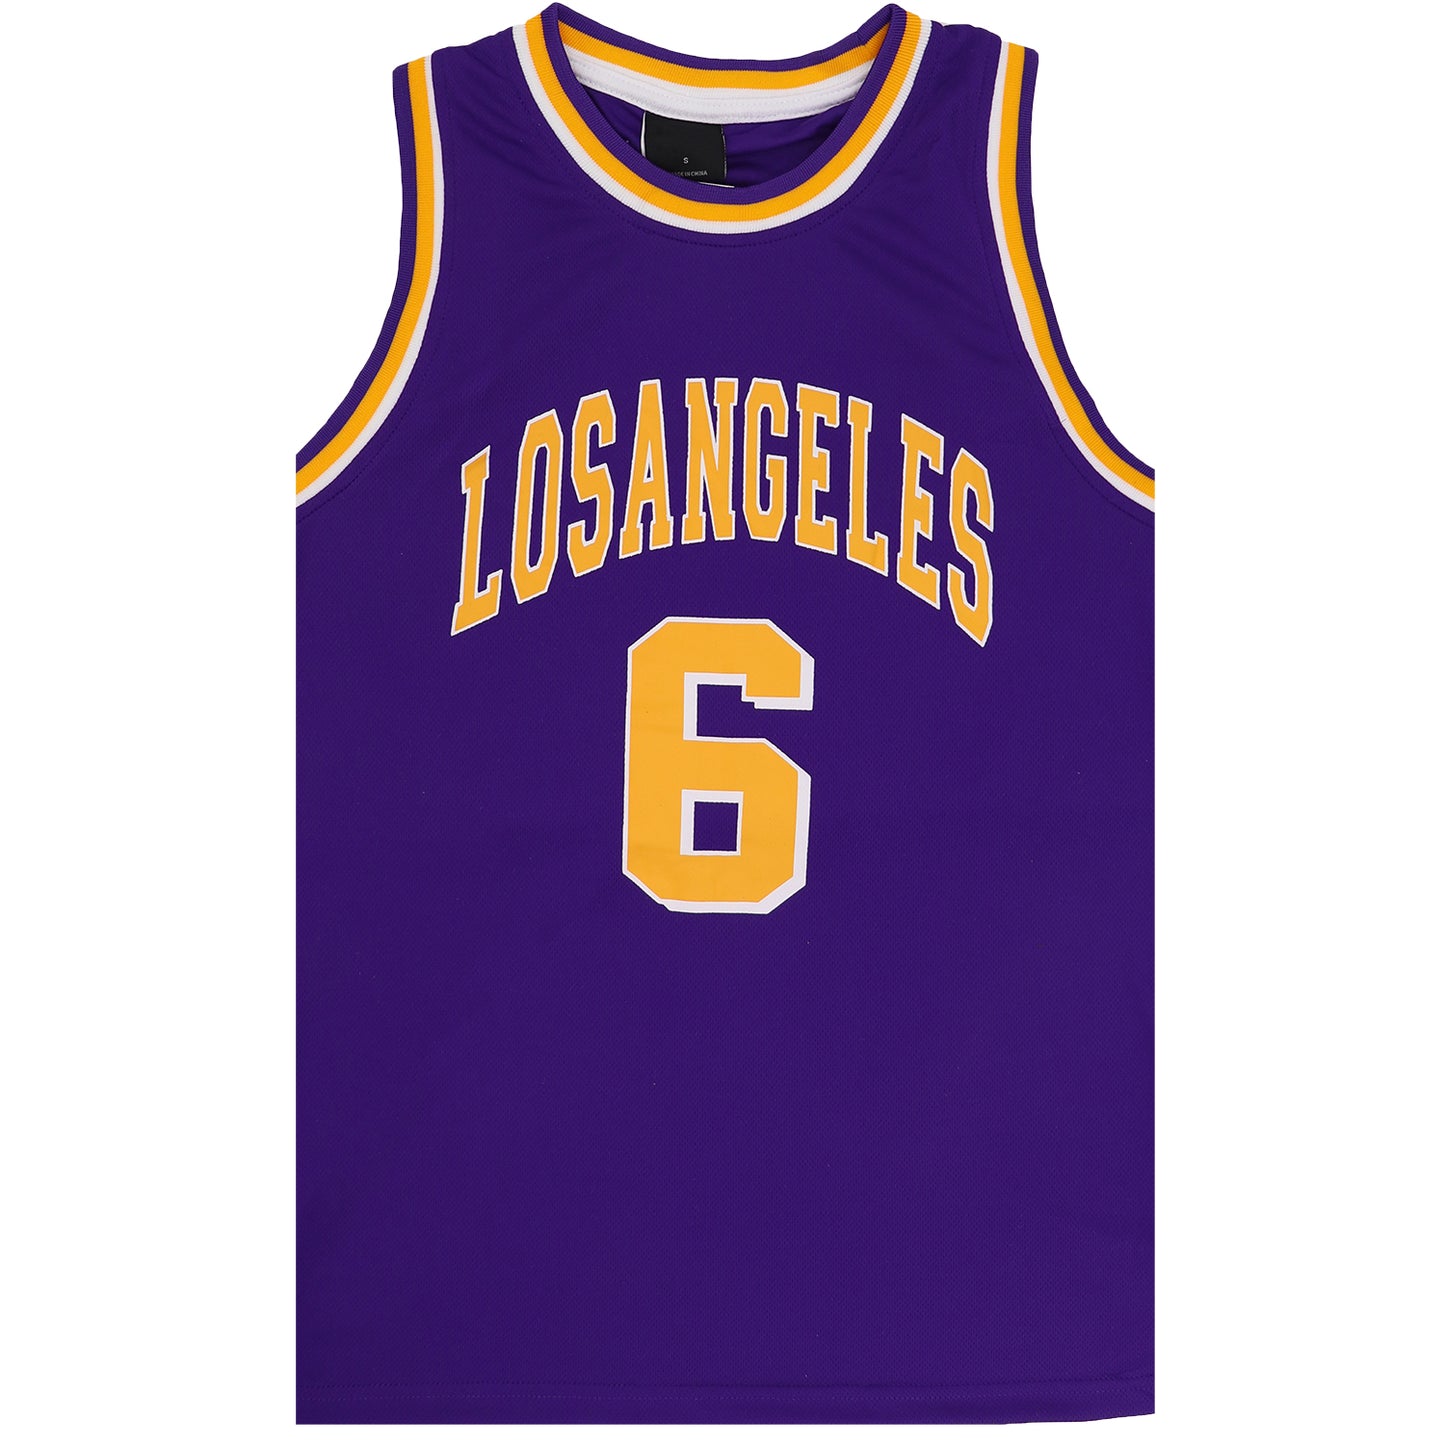 Kid's Basketball Jersey Tank Boys Sports T Shirt Tee Singlet Tops Los Angeles, Yellow - Los Angeles 6, 14